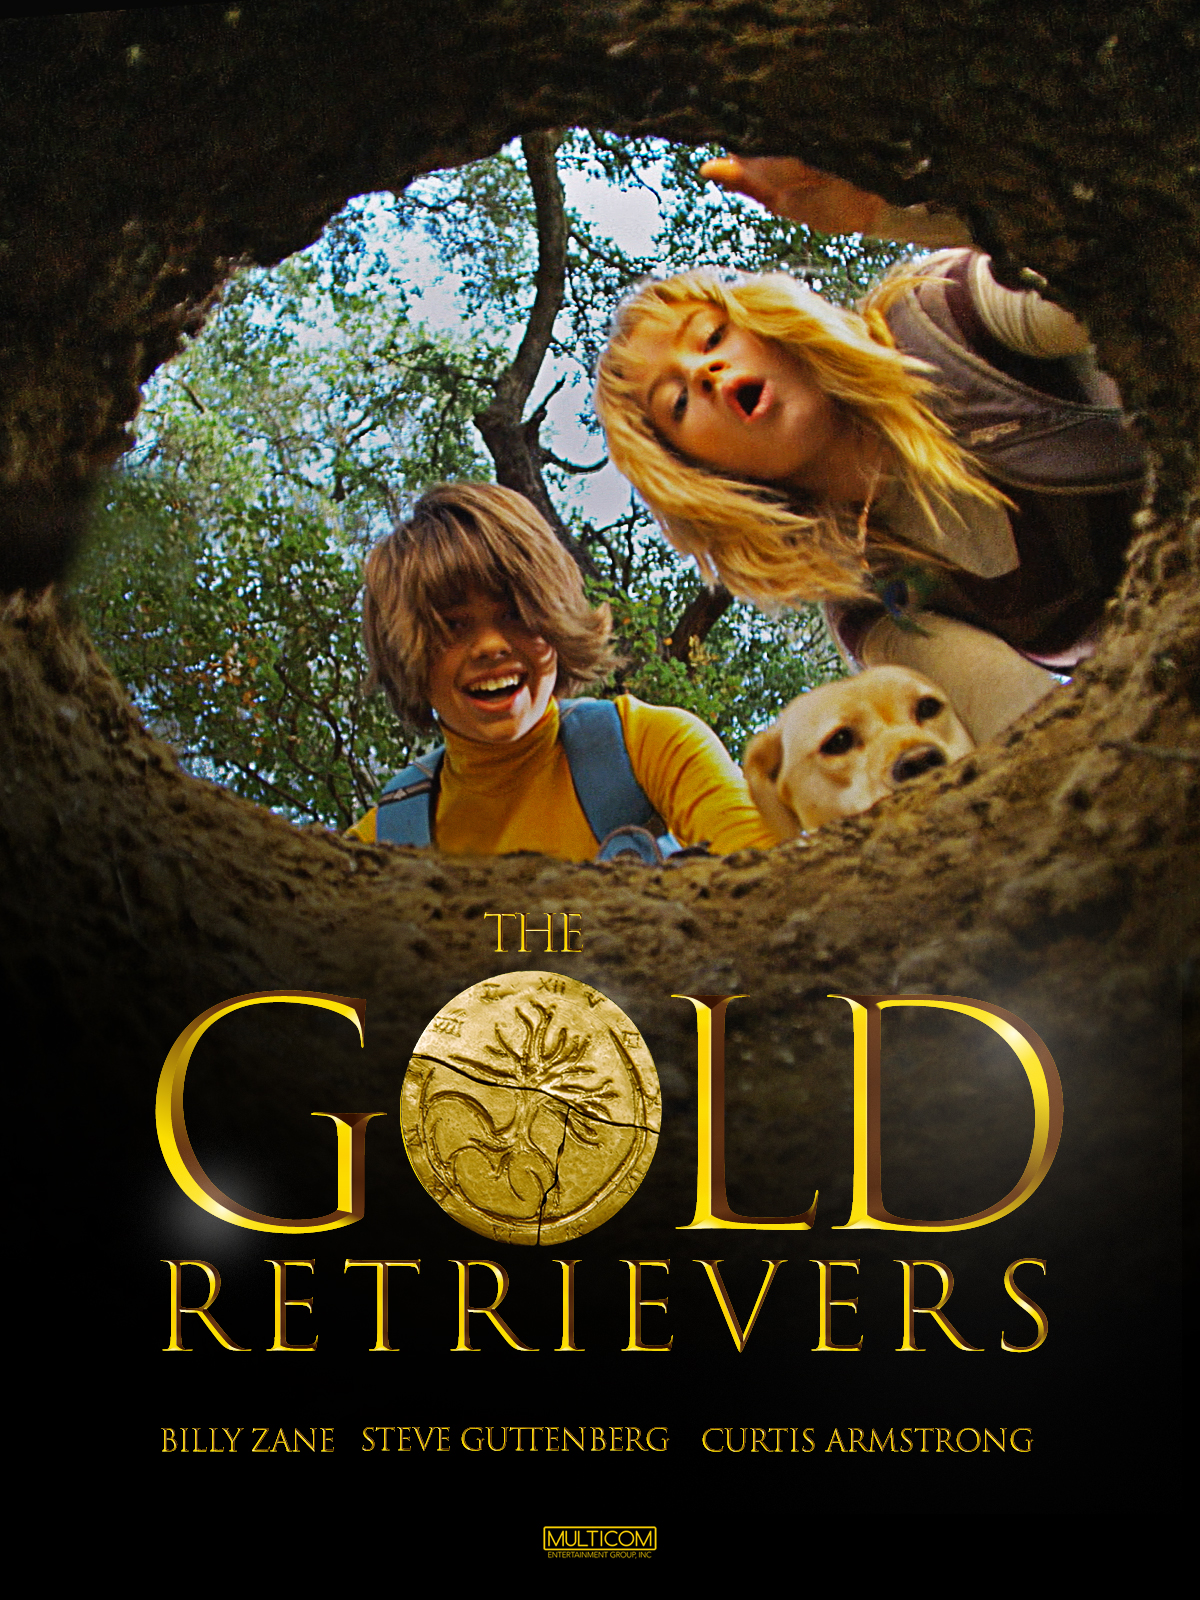 The Gold Retrievers (2009) Screenshot 1